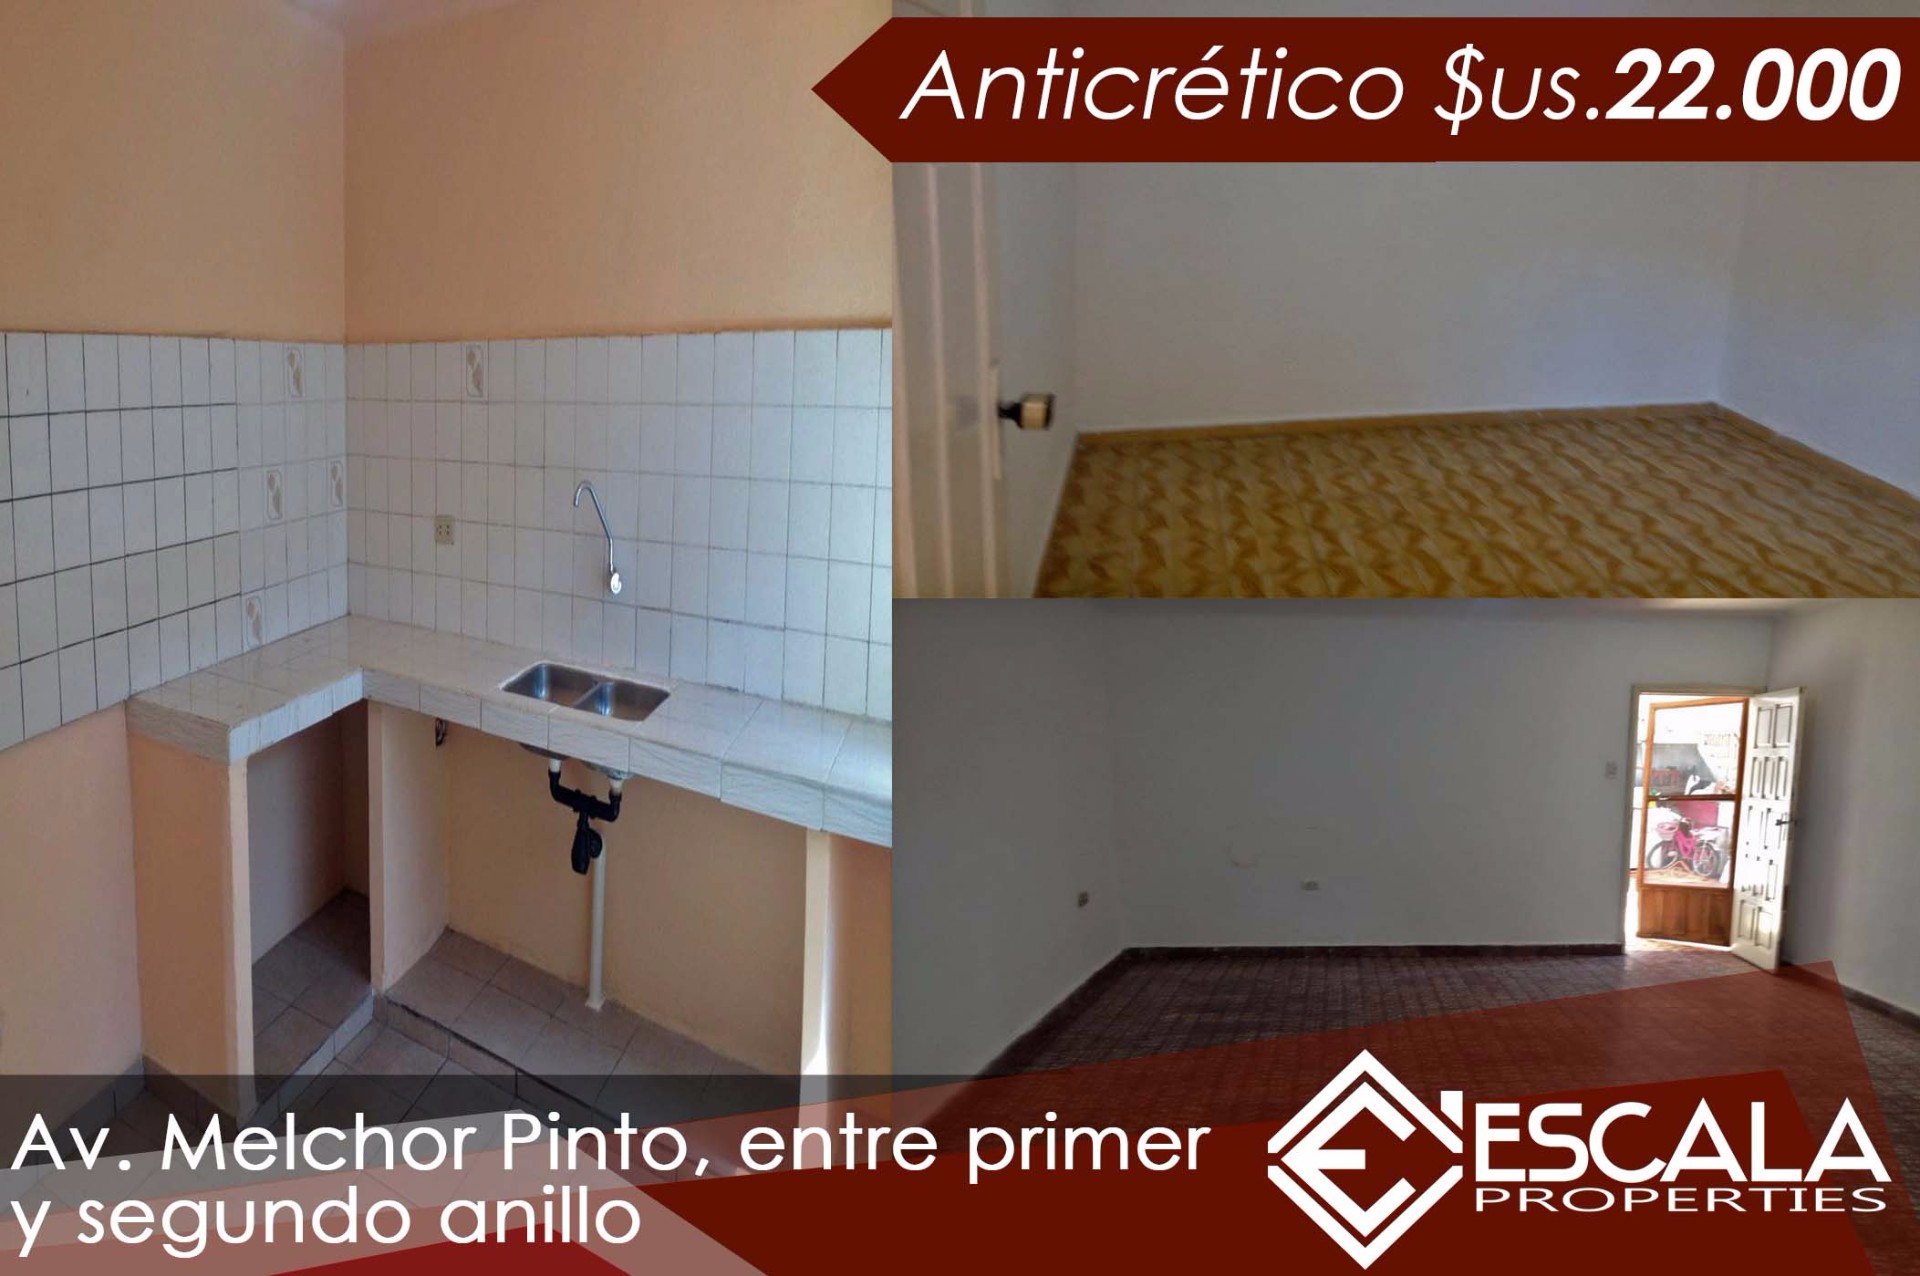 Departamento en AnticréticoAvenida Melchor Pinto entre 1er y 2do anillo 2 dormitorios 2 baños  Foto 1